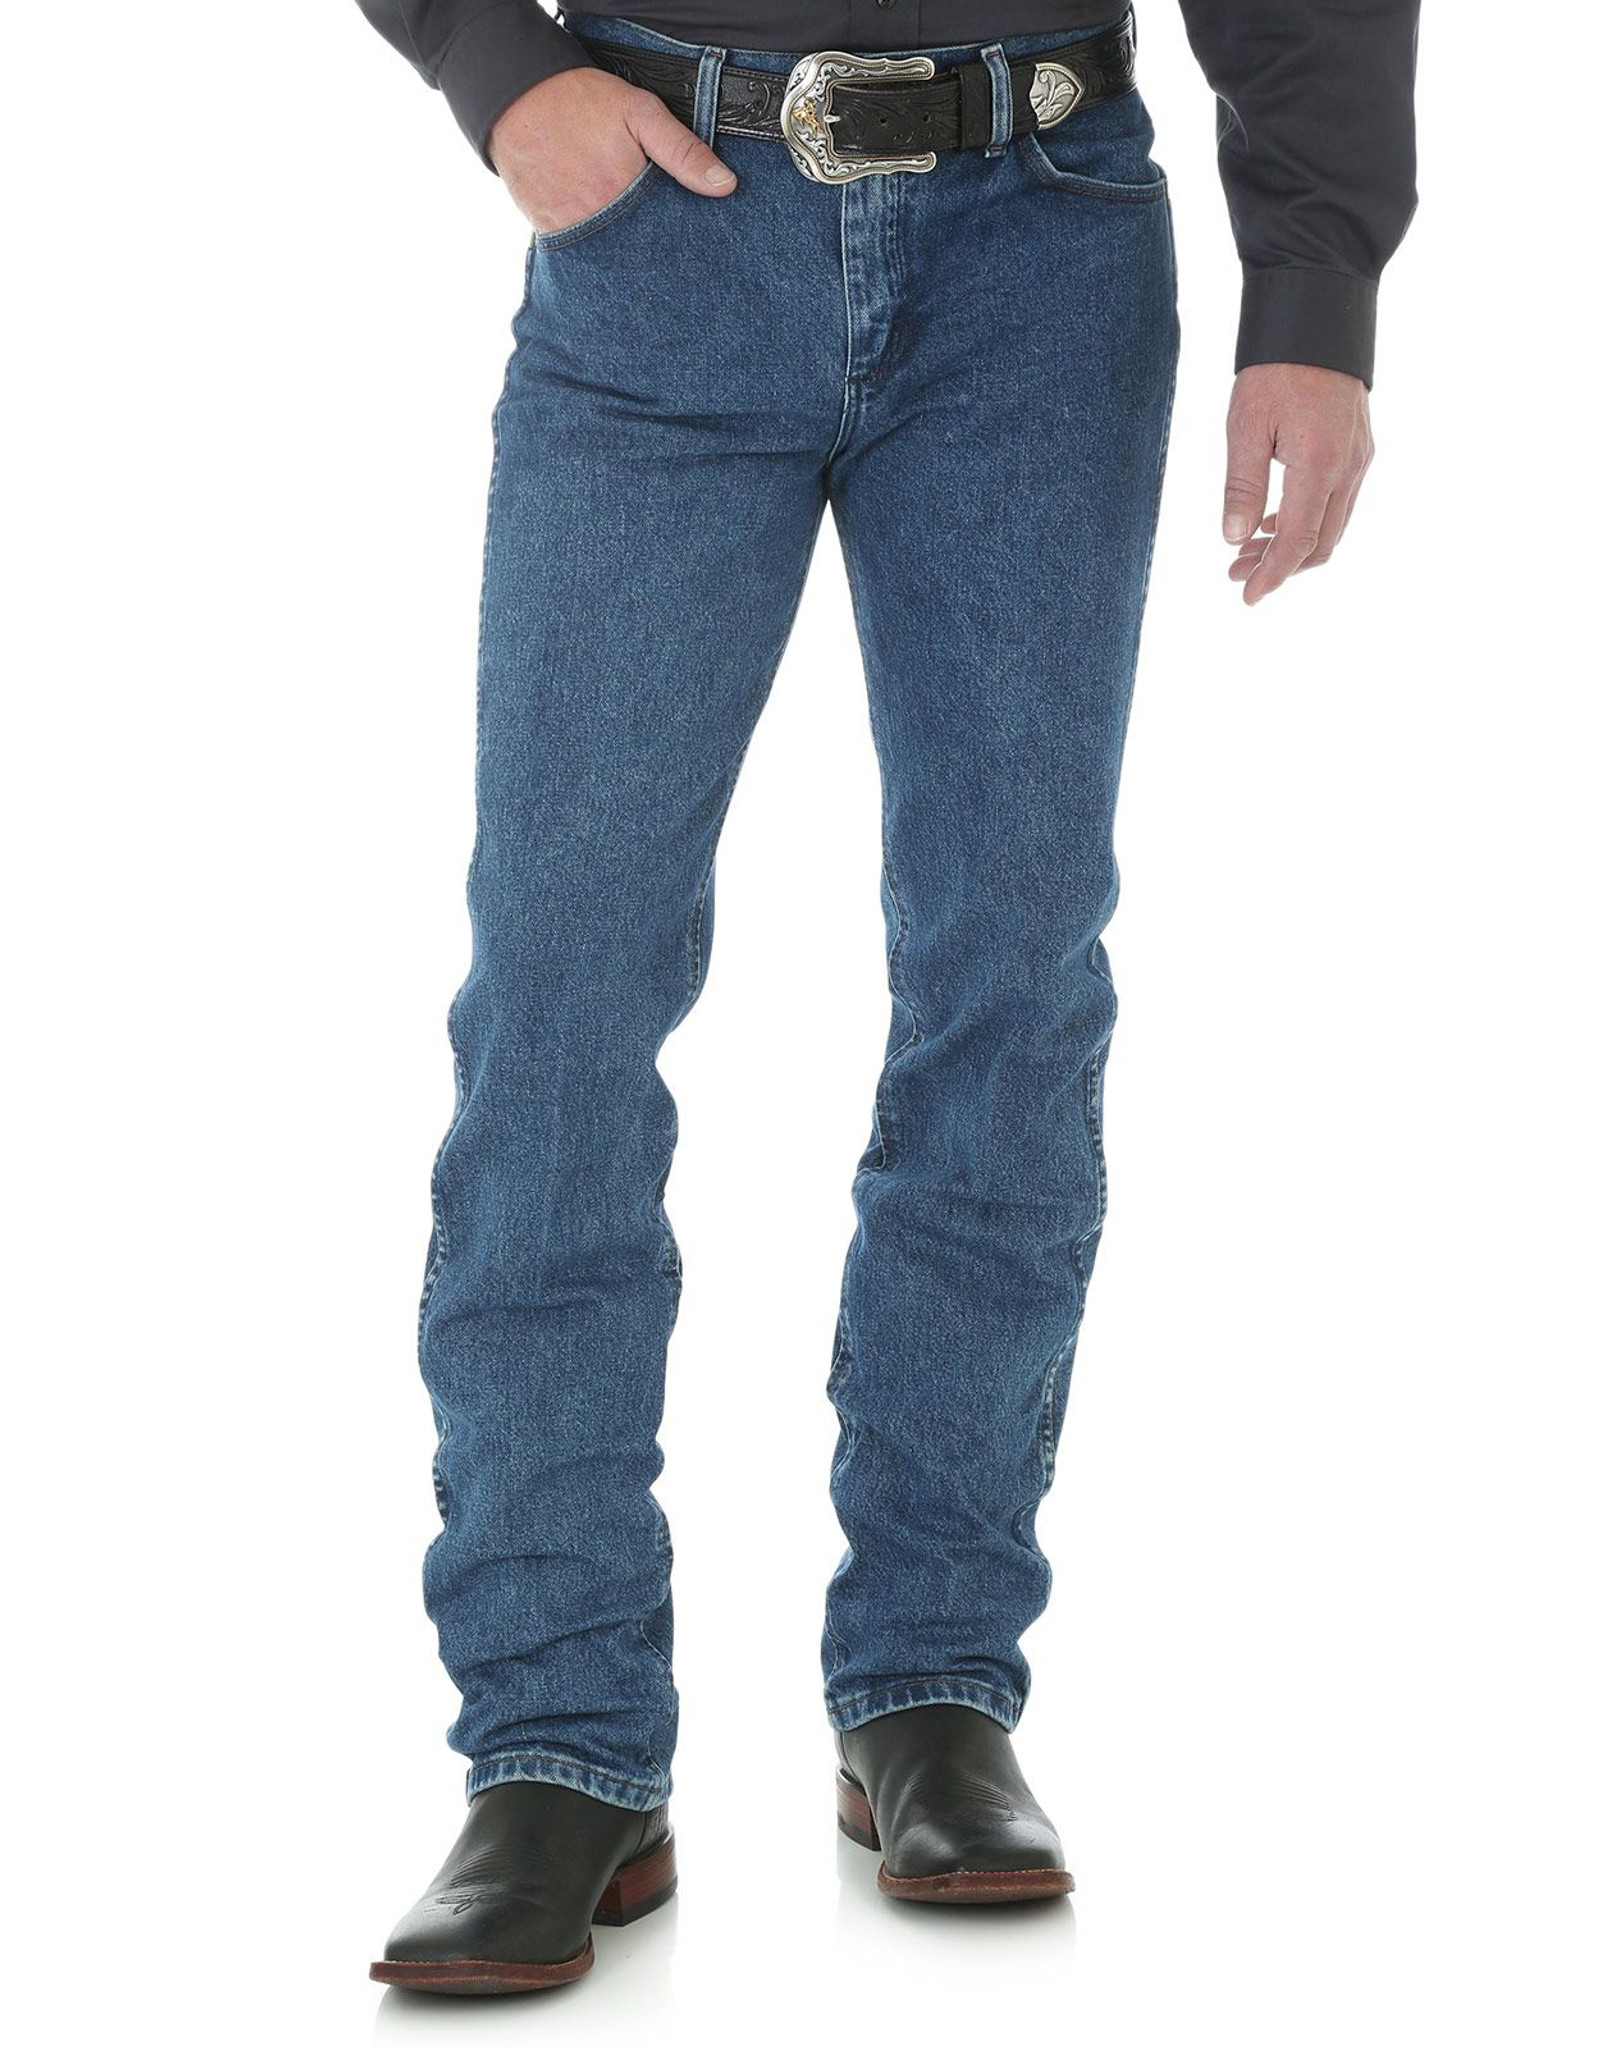 Wrangler Men's 36 Slim Mid Rise Slim Fit Boot Cut Jeans - Dark Stone